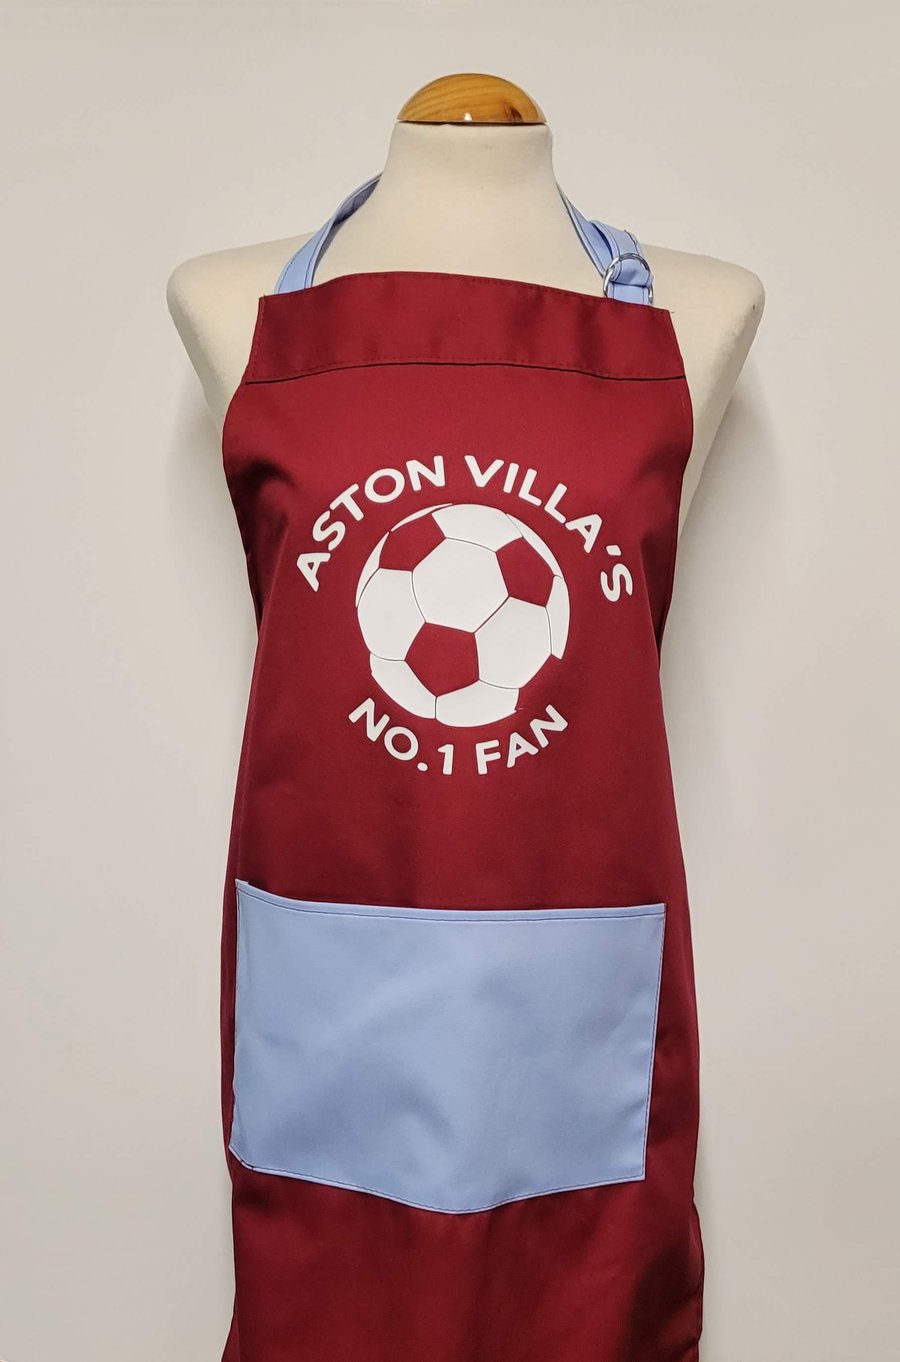 Aston Villa - No.1 fan. Medium cotton apron with pocket 